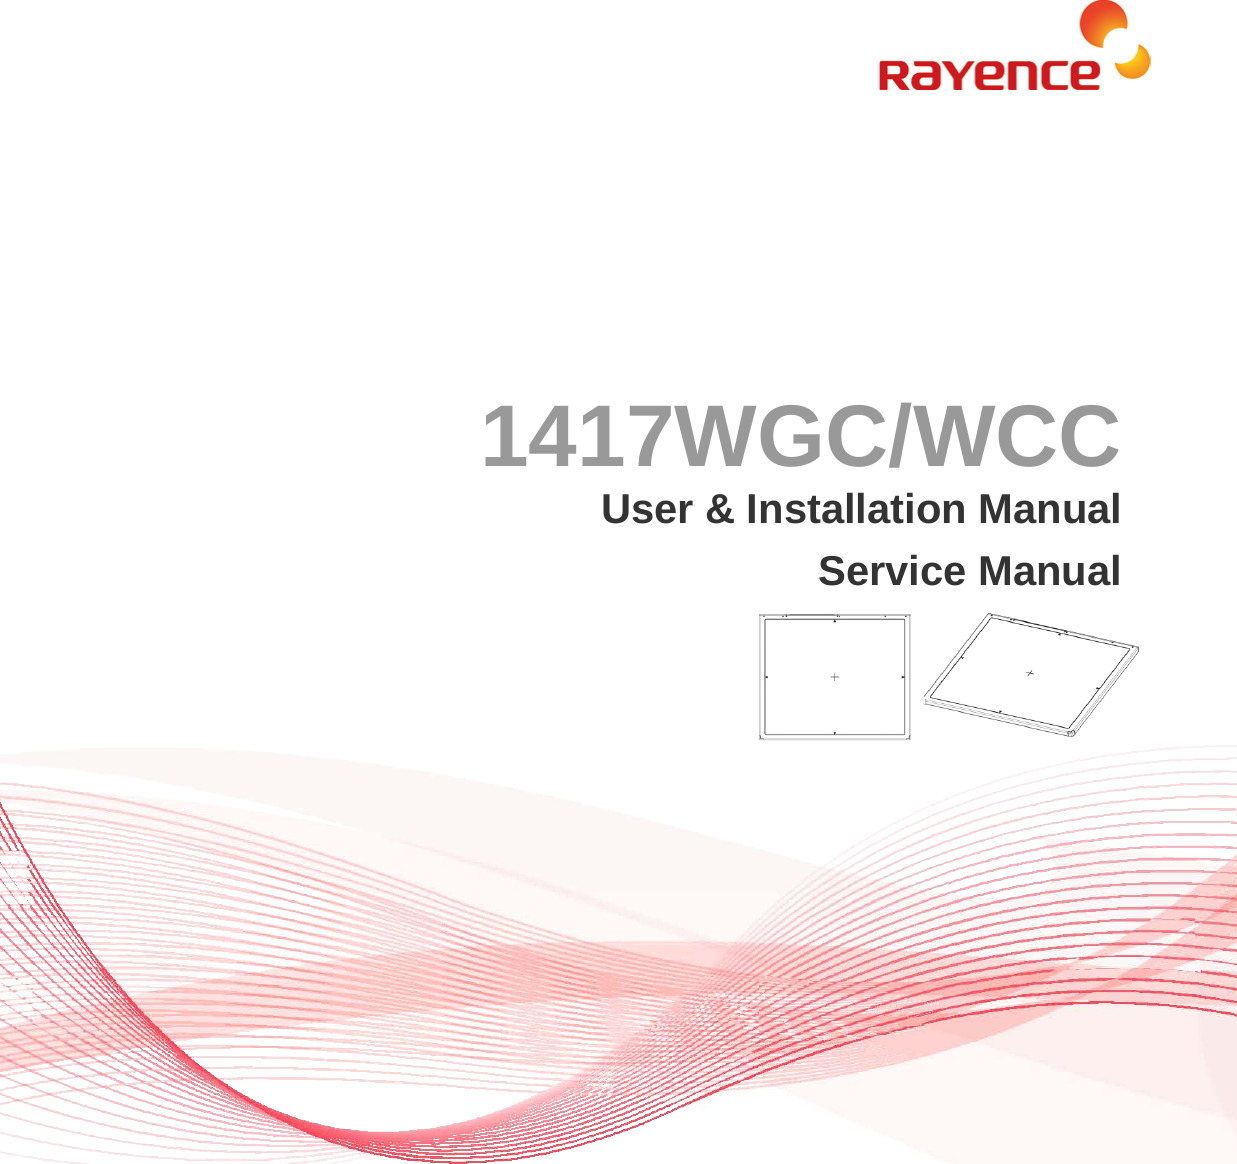  1417WGC/WCC User &amp; Installation Manual Service Manual                         